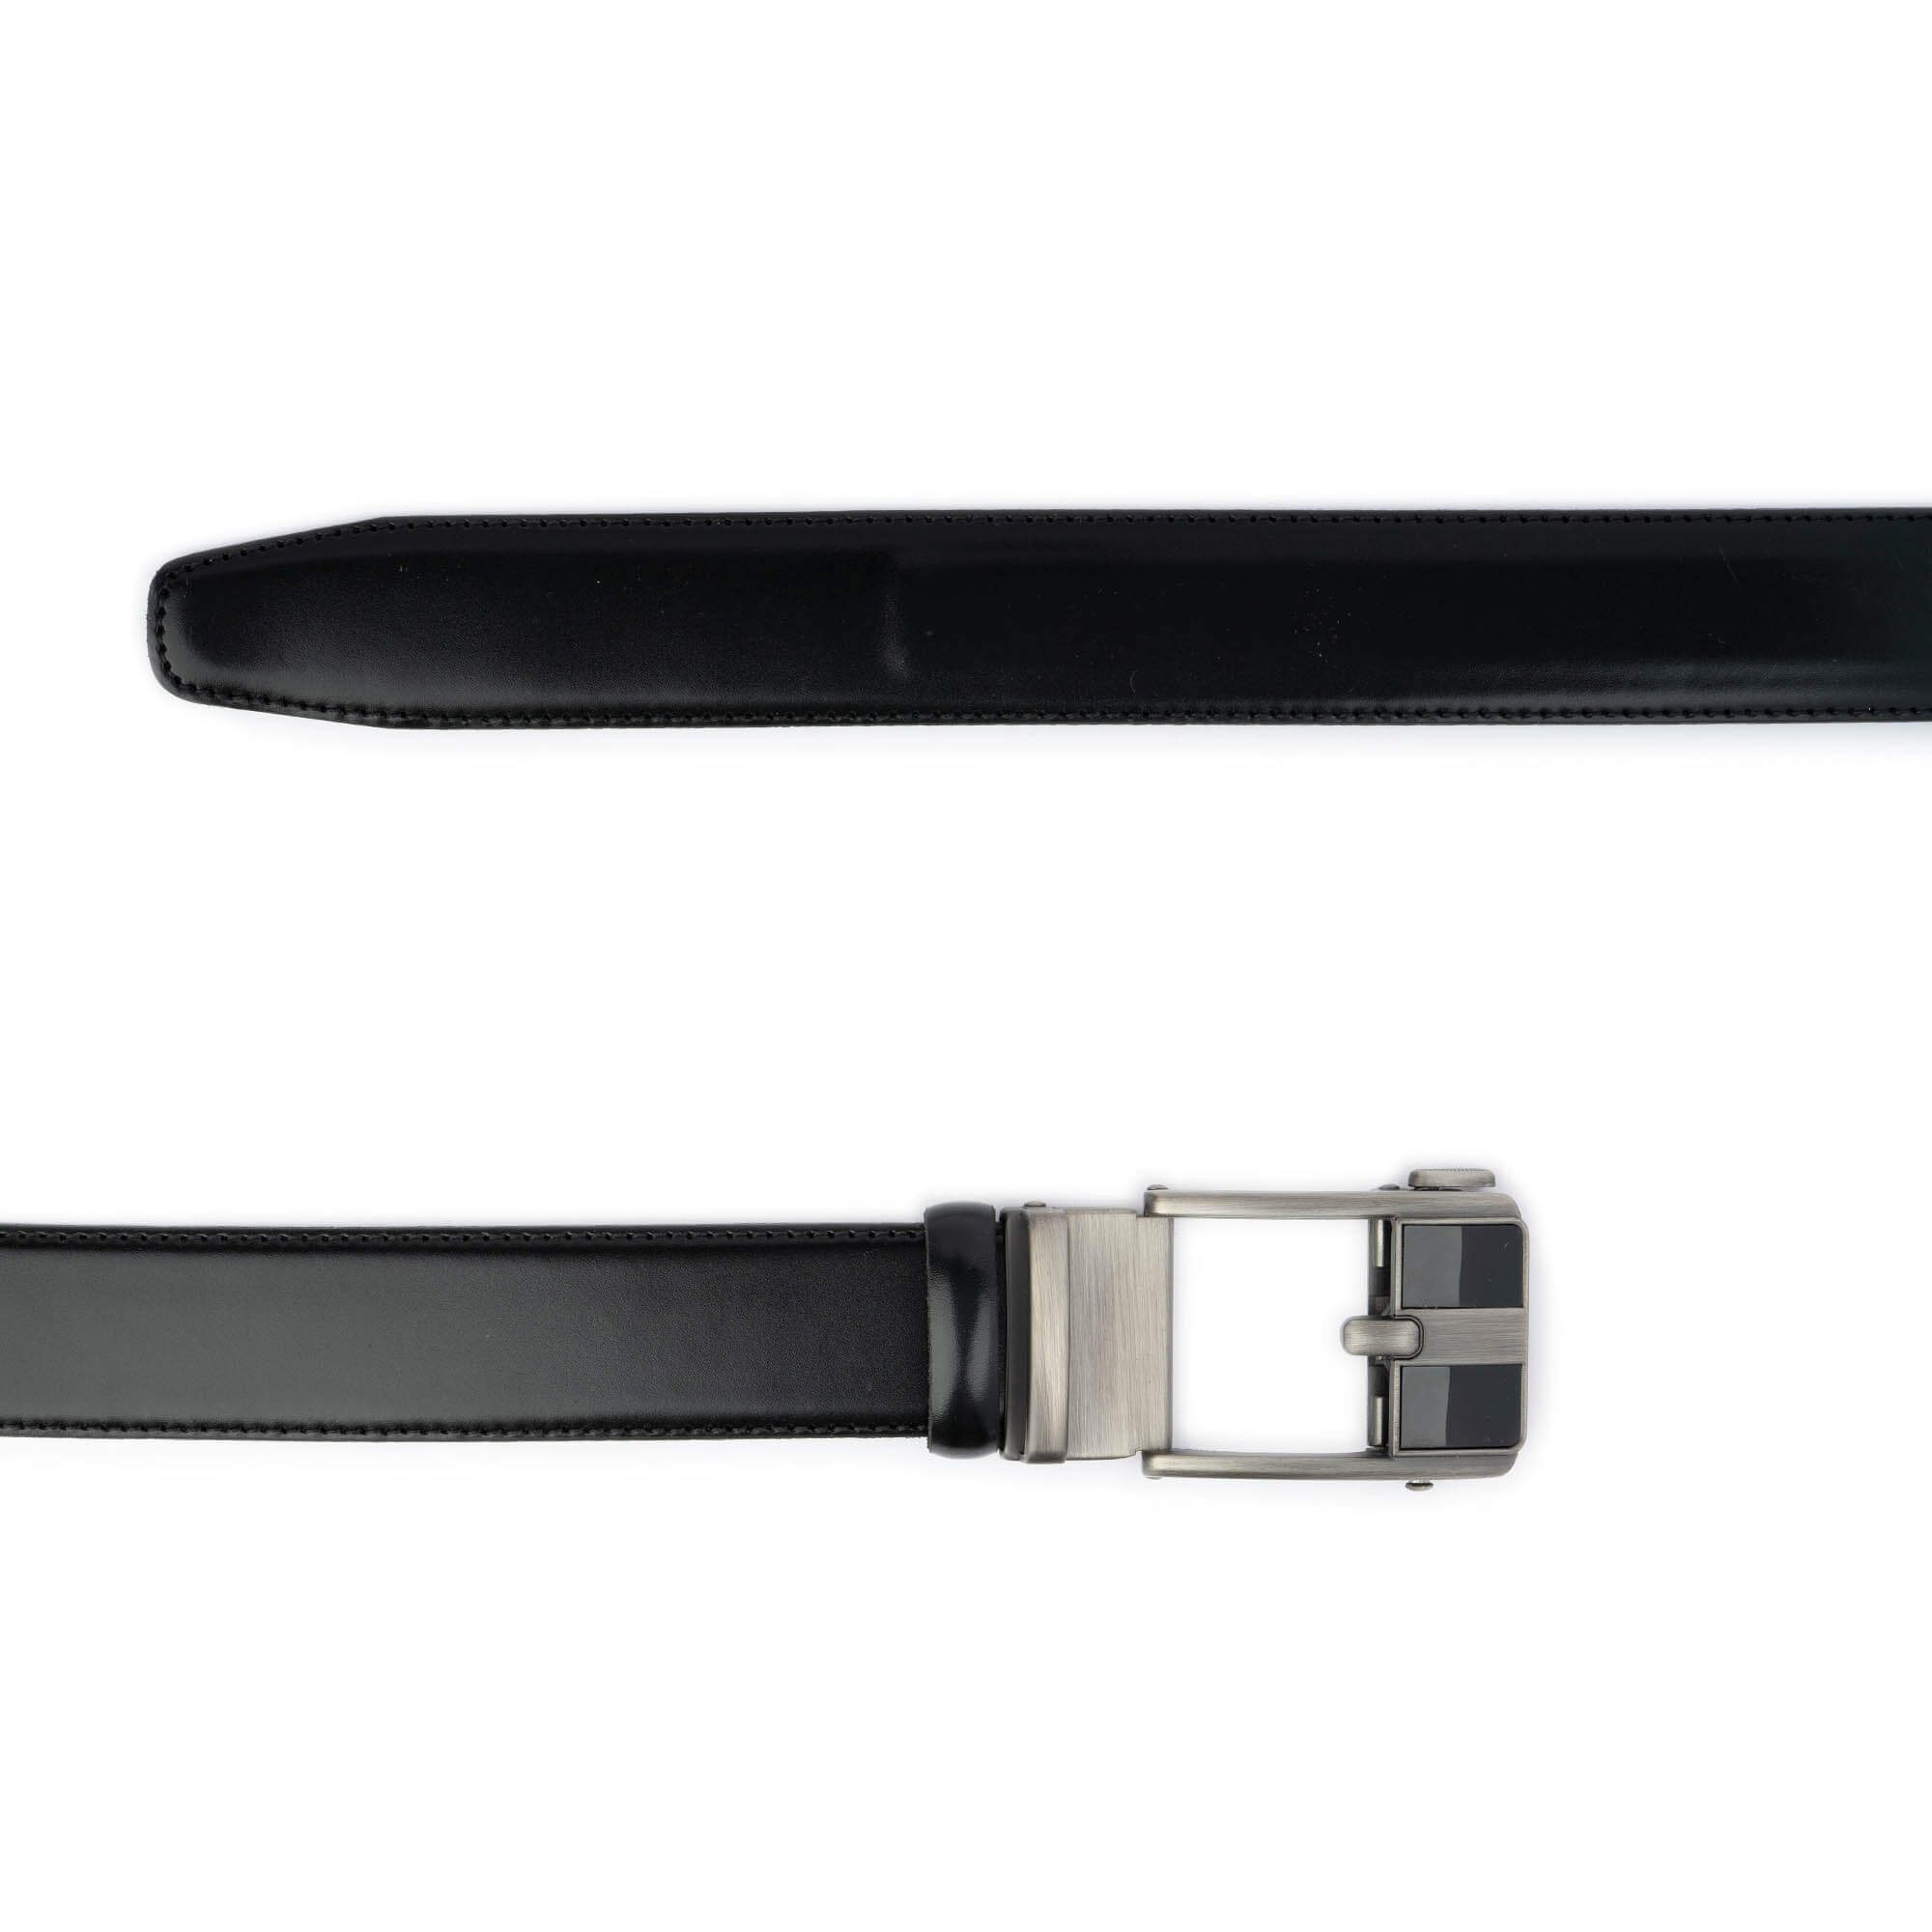 Buy Black Ratchet Mens Luxury Belt - Real Leather - LeatherBeltsOnline.com